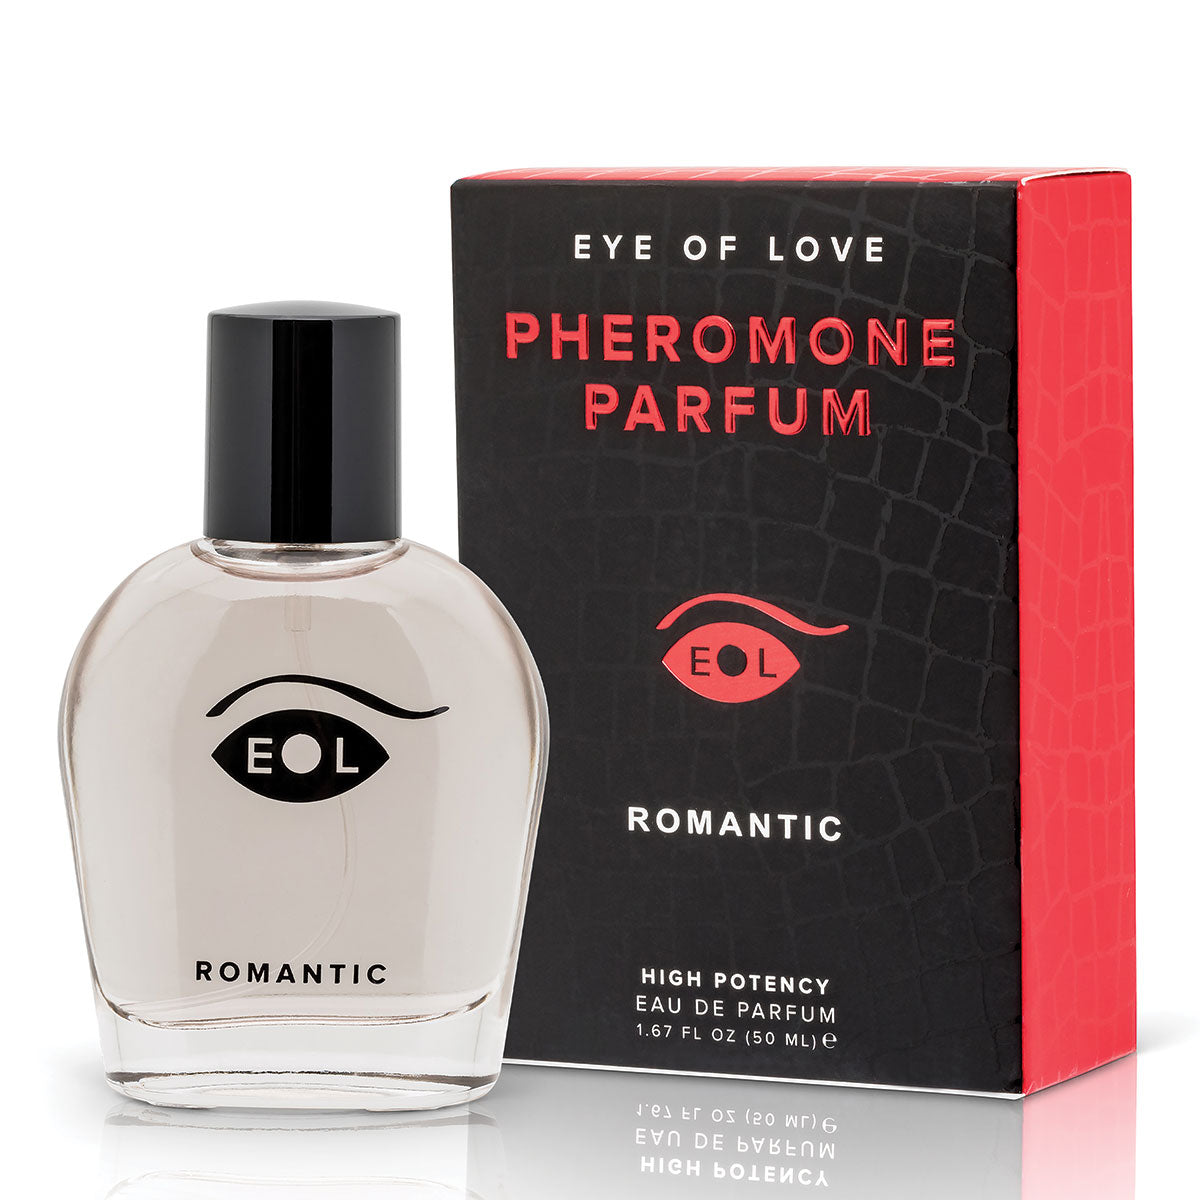 Eye of Love Pheromone Parfum 50ml - Romantic (M to F)